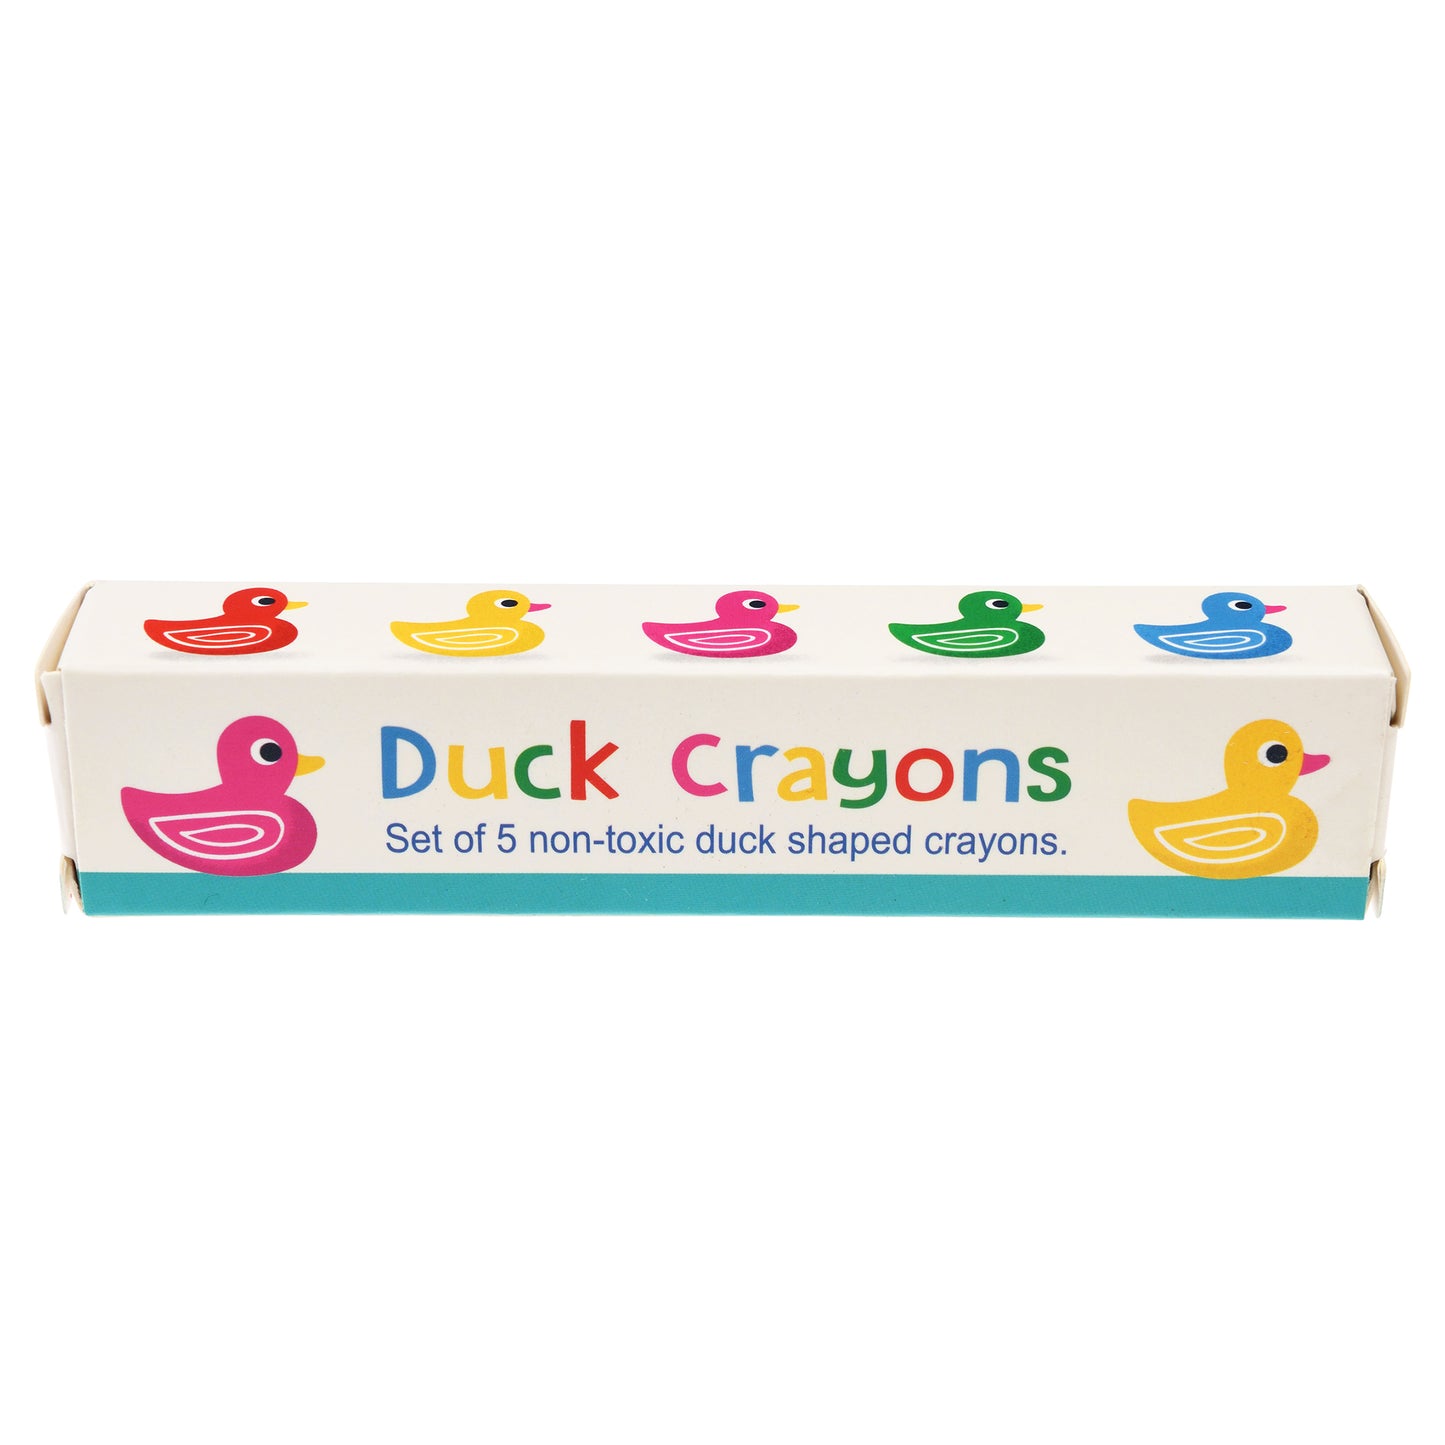 Duck Crayons